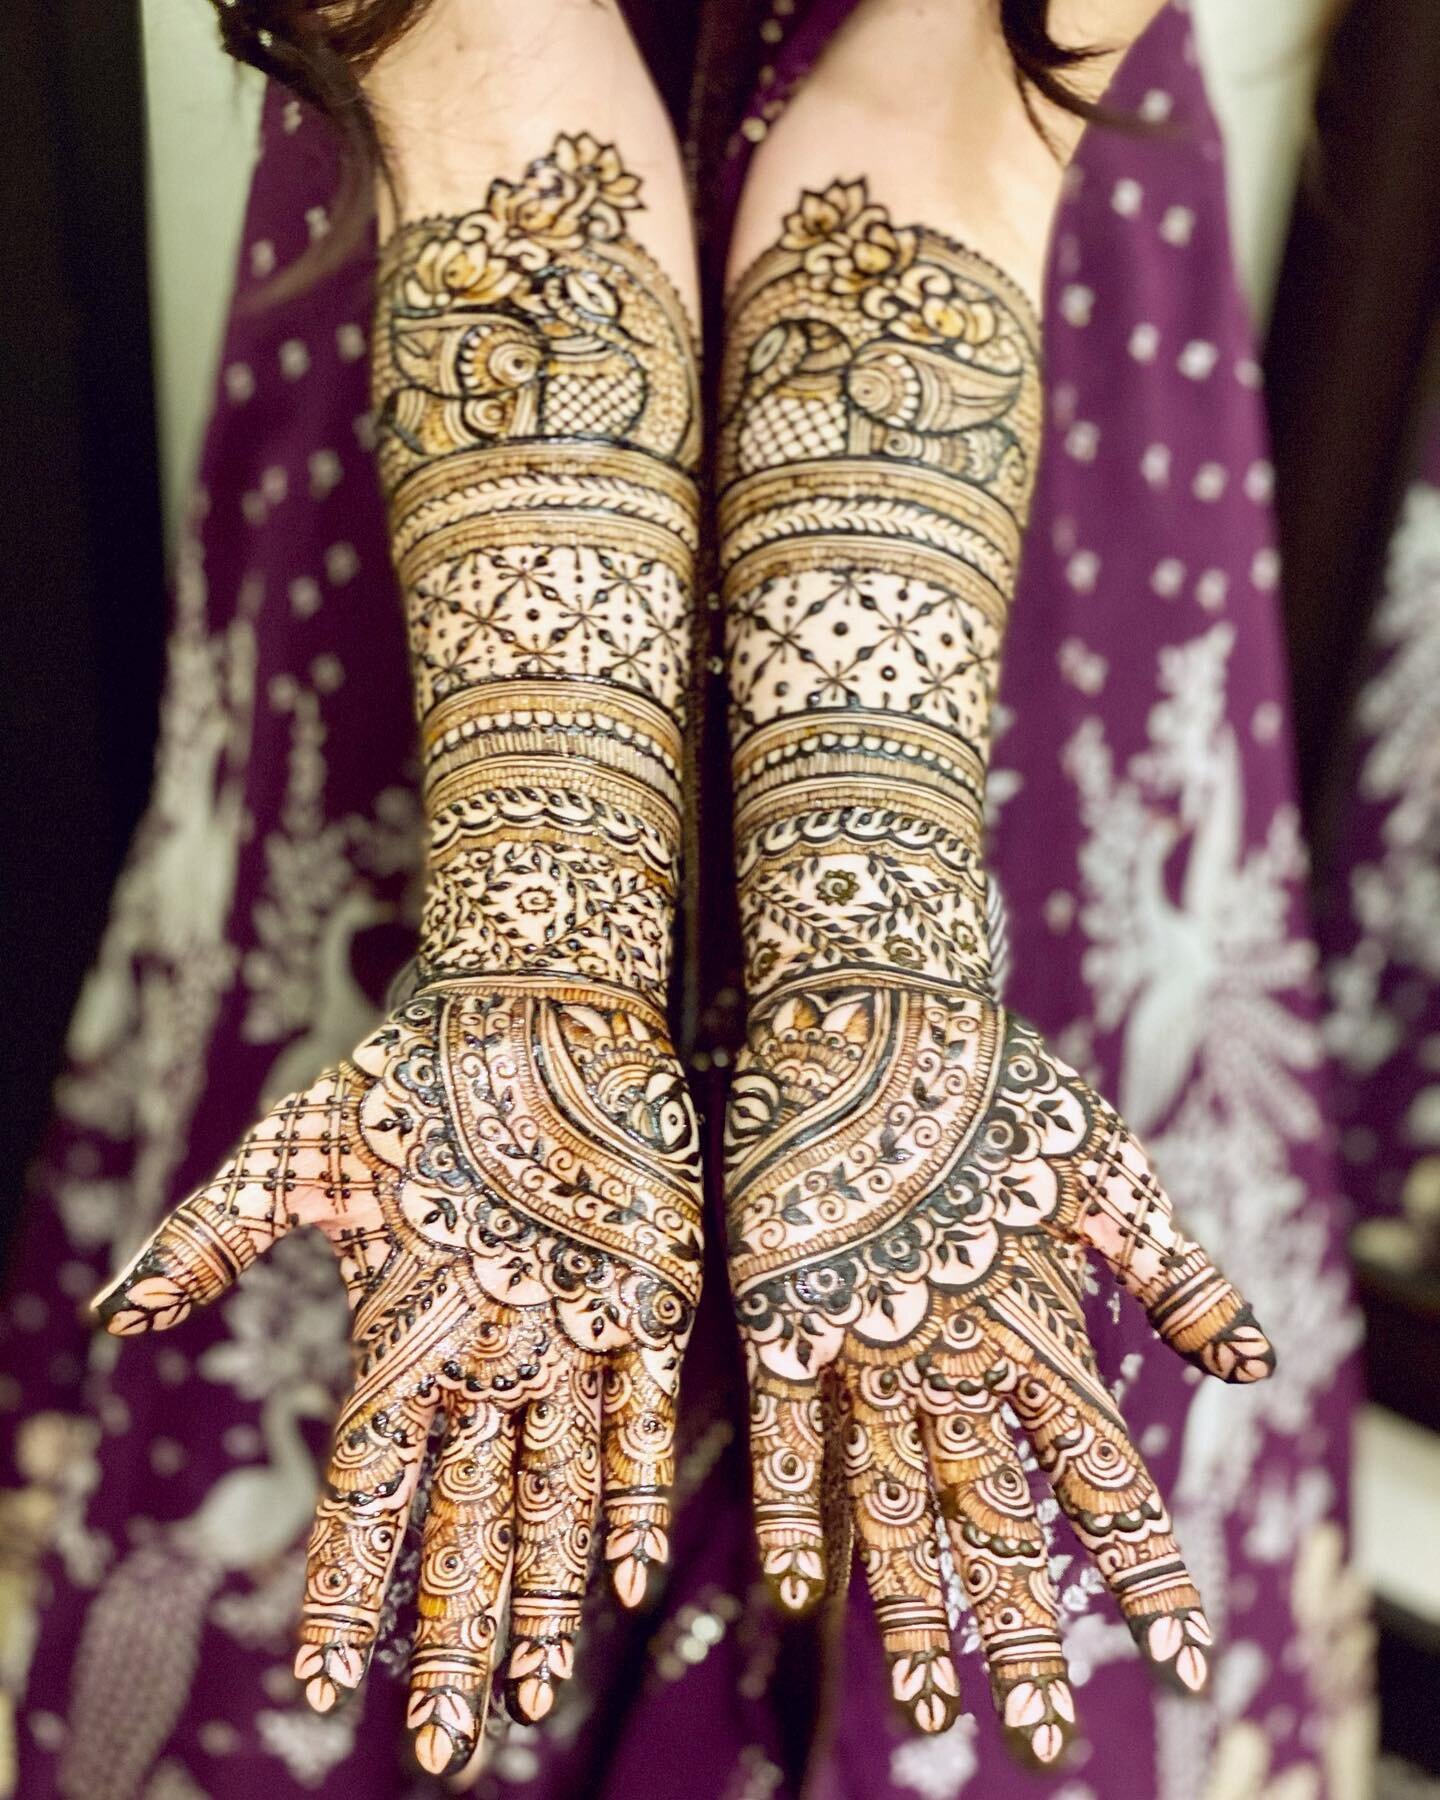 Samantha&rsquo;s bridal henna ✨💕

#bridalhenna #torontohenna #torontowedding #wedmegood #touchofdimple #torontobridalhenna